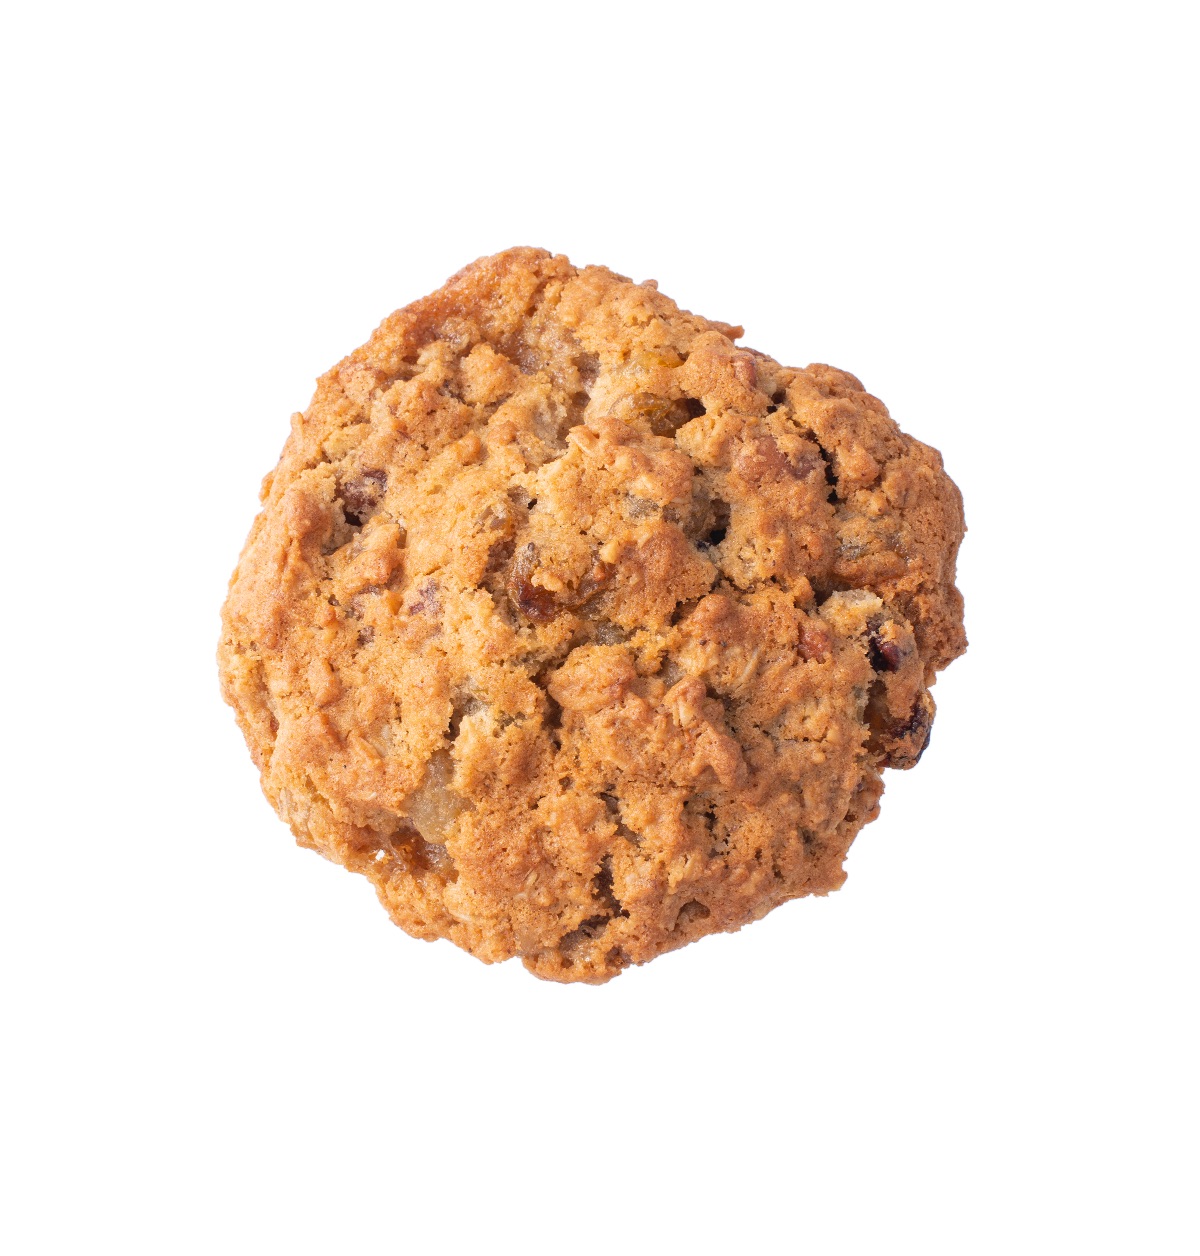 oatmeal raisin cookie